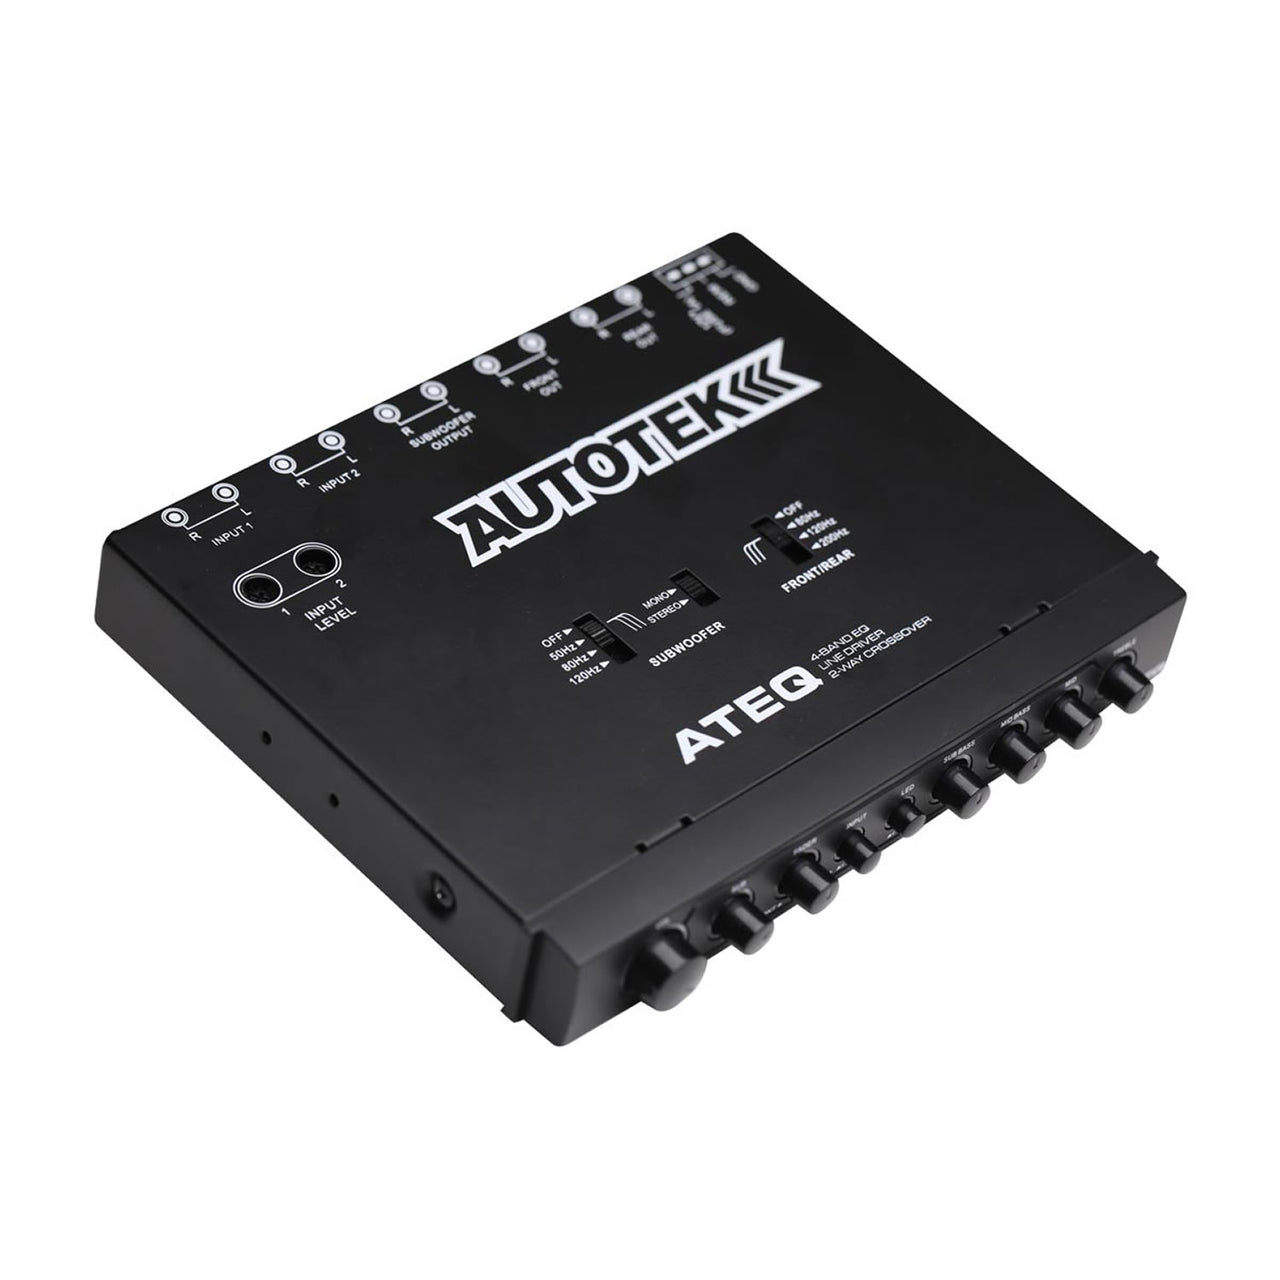 AUTOTEK ATEQ 4-Band Equalizer with 9-Volt Line-Driver and Multiple-Source Signal Processor